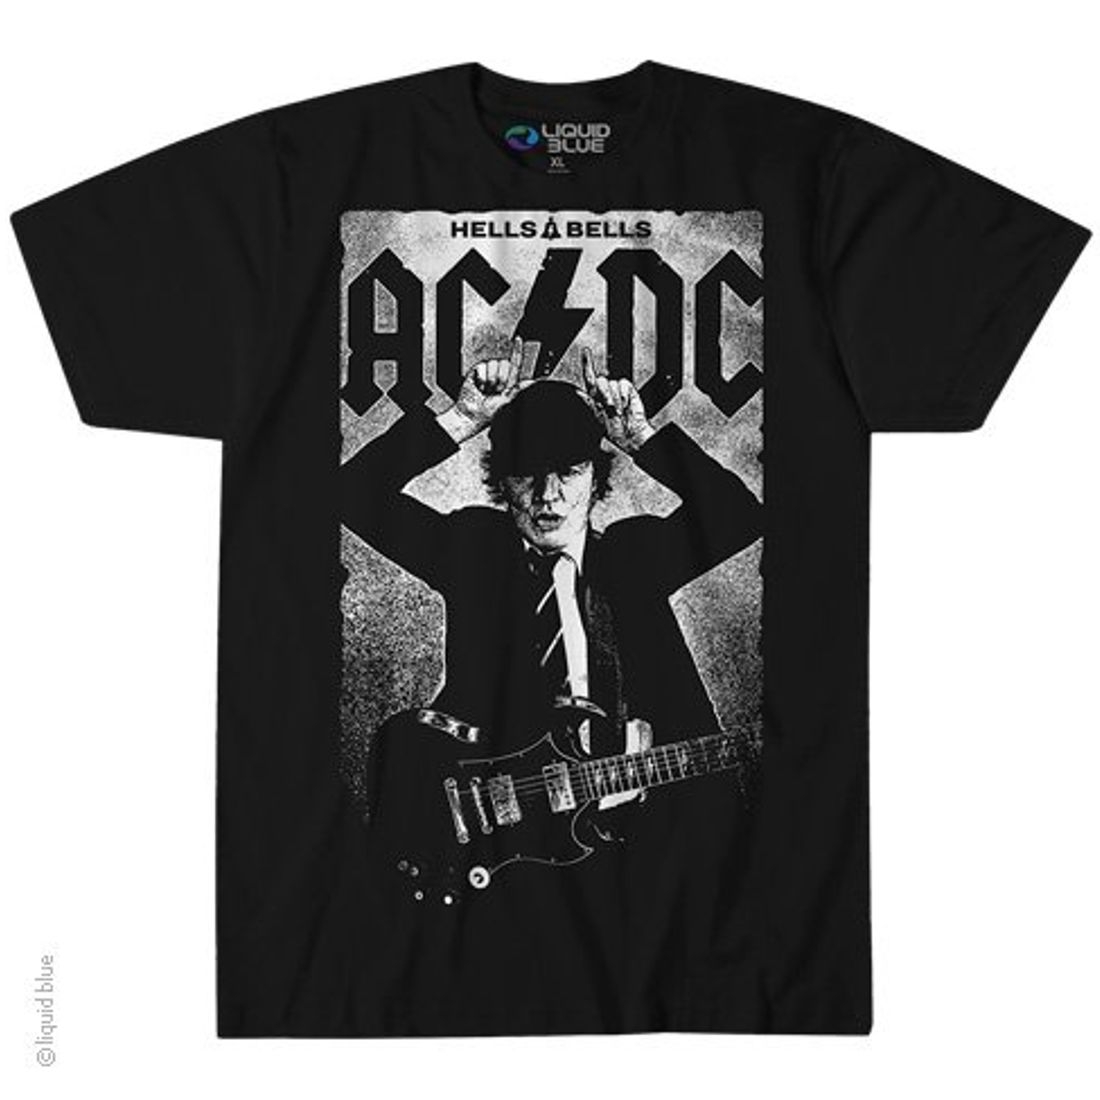 Liquid Blue T-Shirt - AC/DC - Angus Young Poster